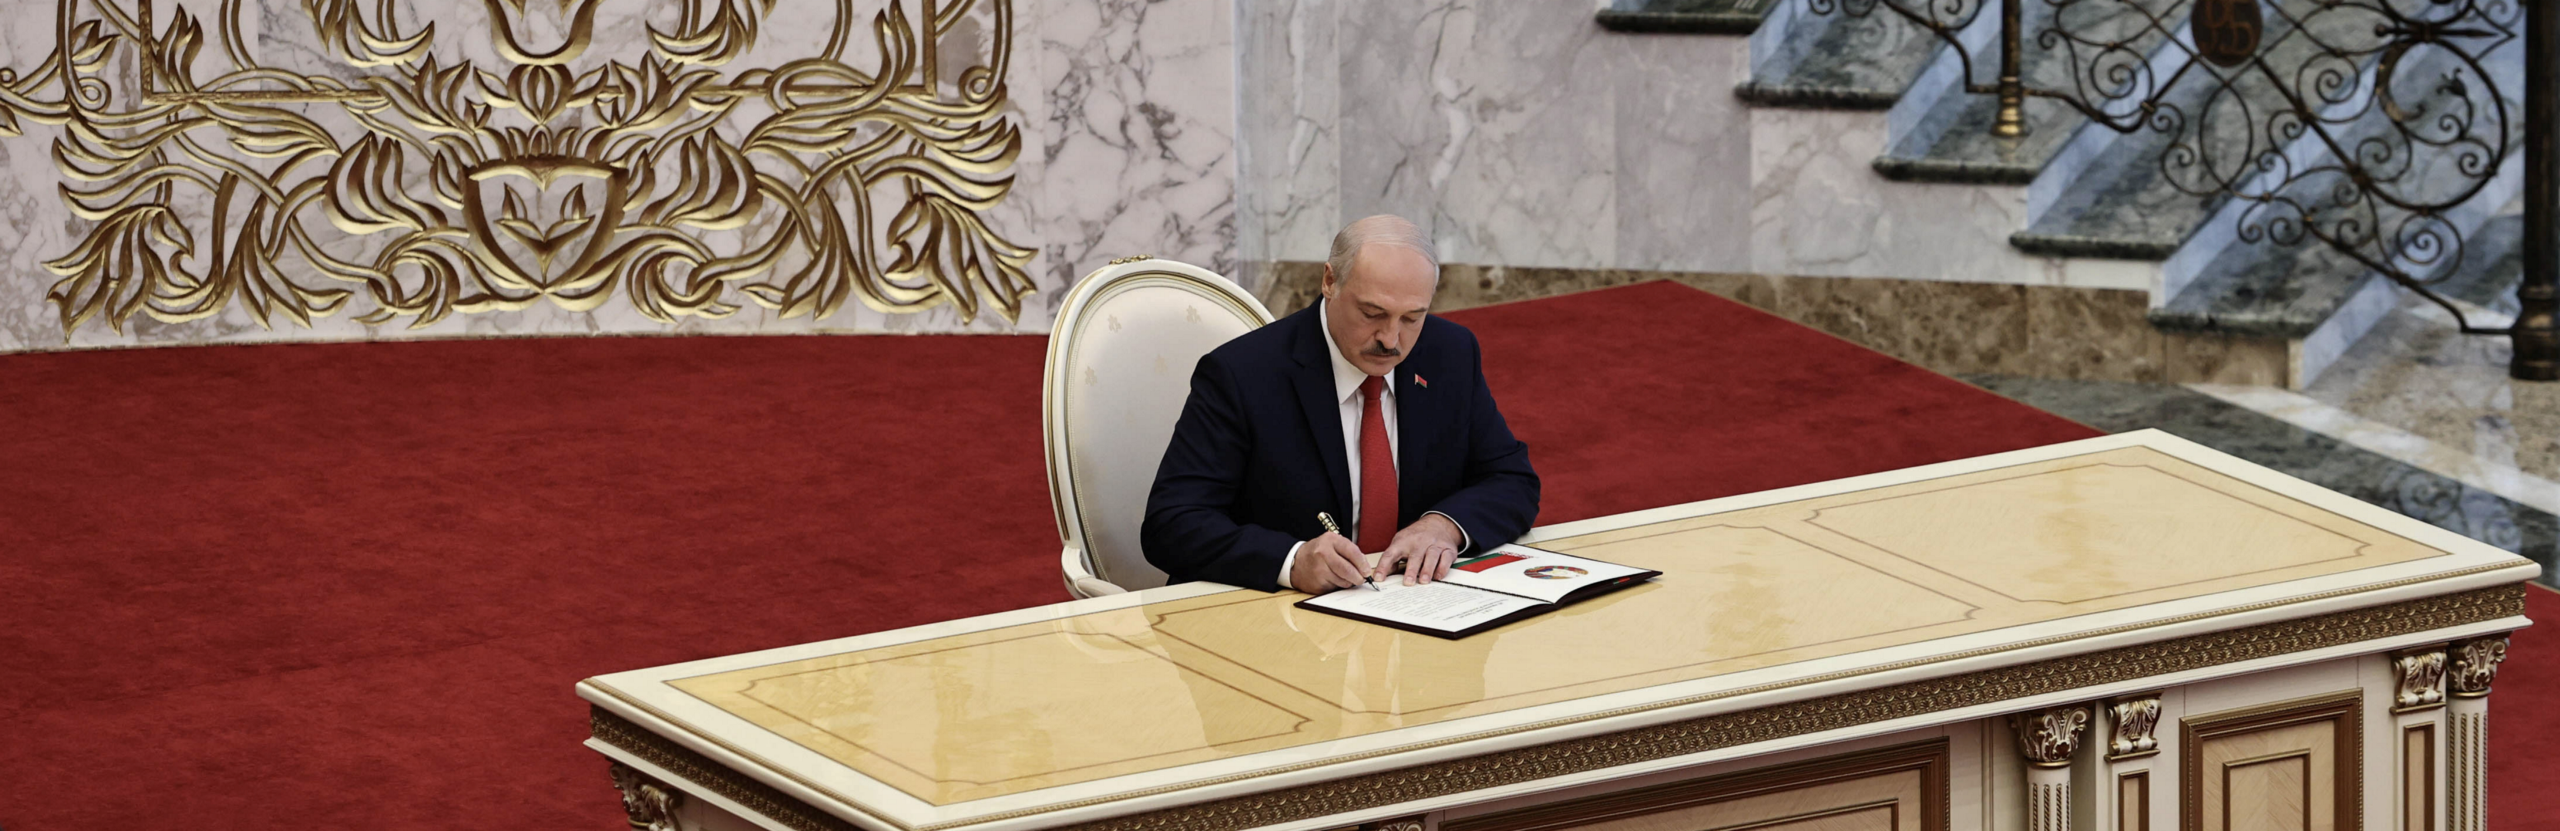 Lukashenka’s secret inauguration stirs up social media